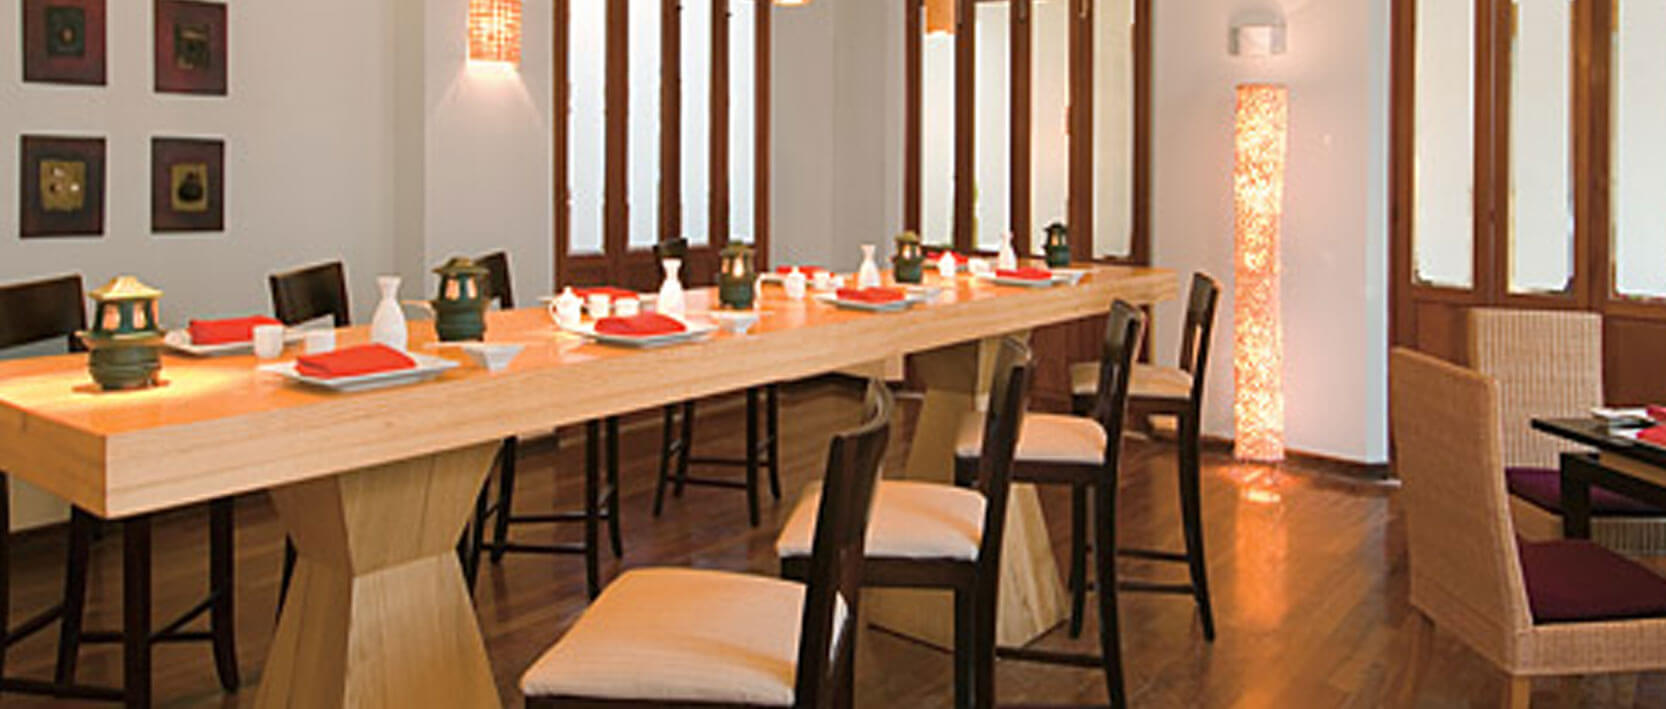 Dreams Tulum Resort Restaurants and Bars - Gohan Restaurant